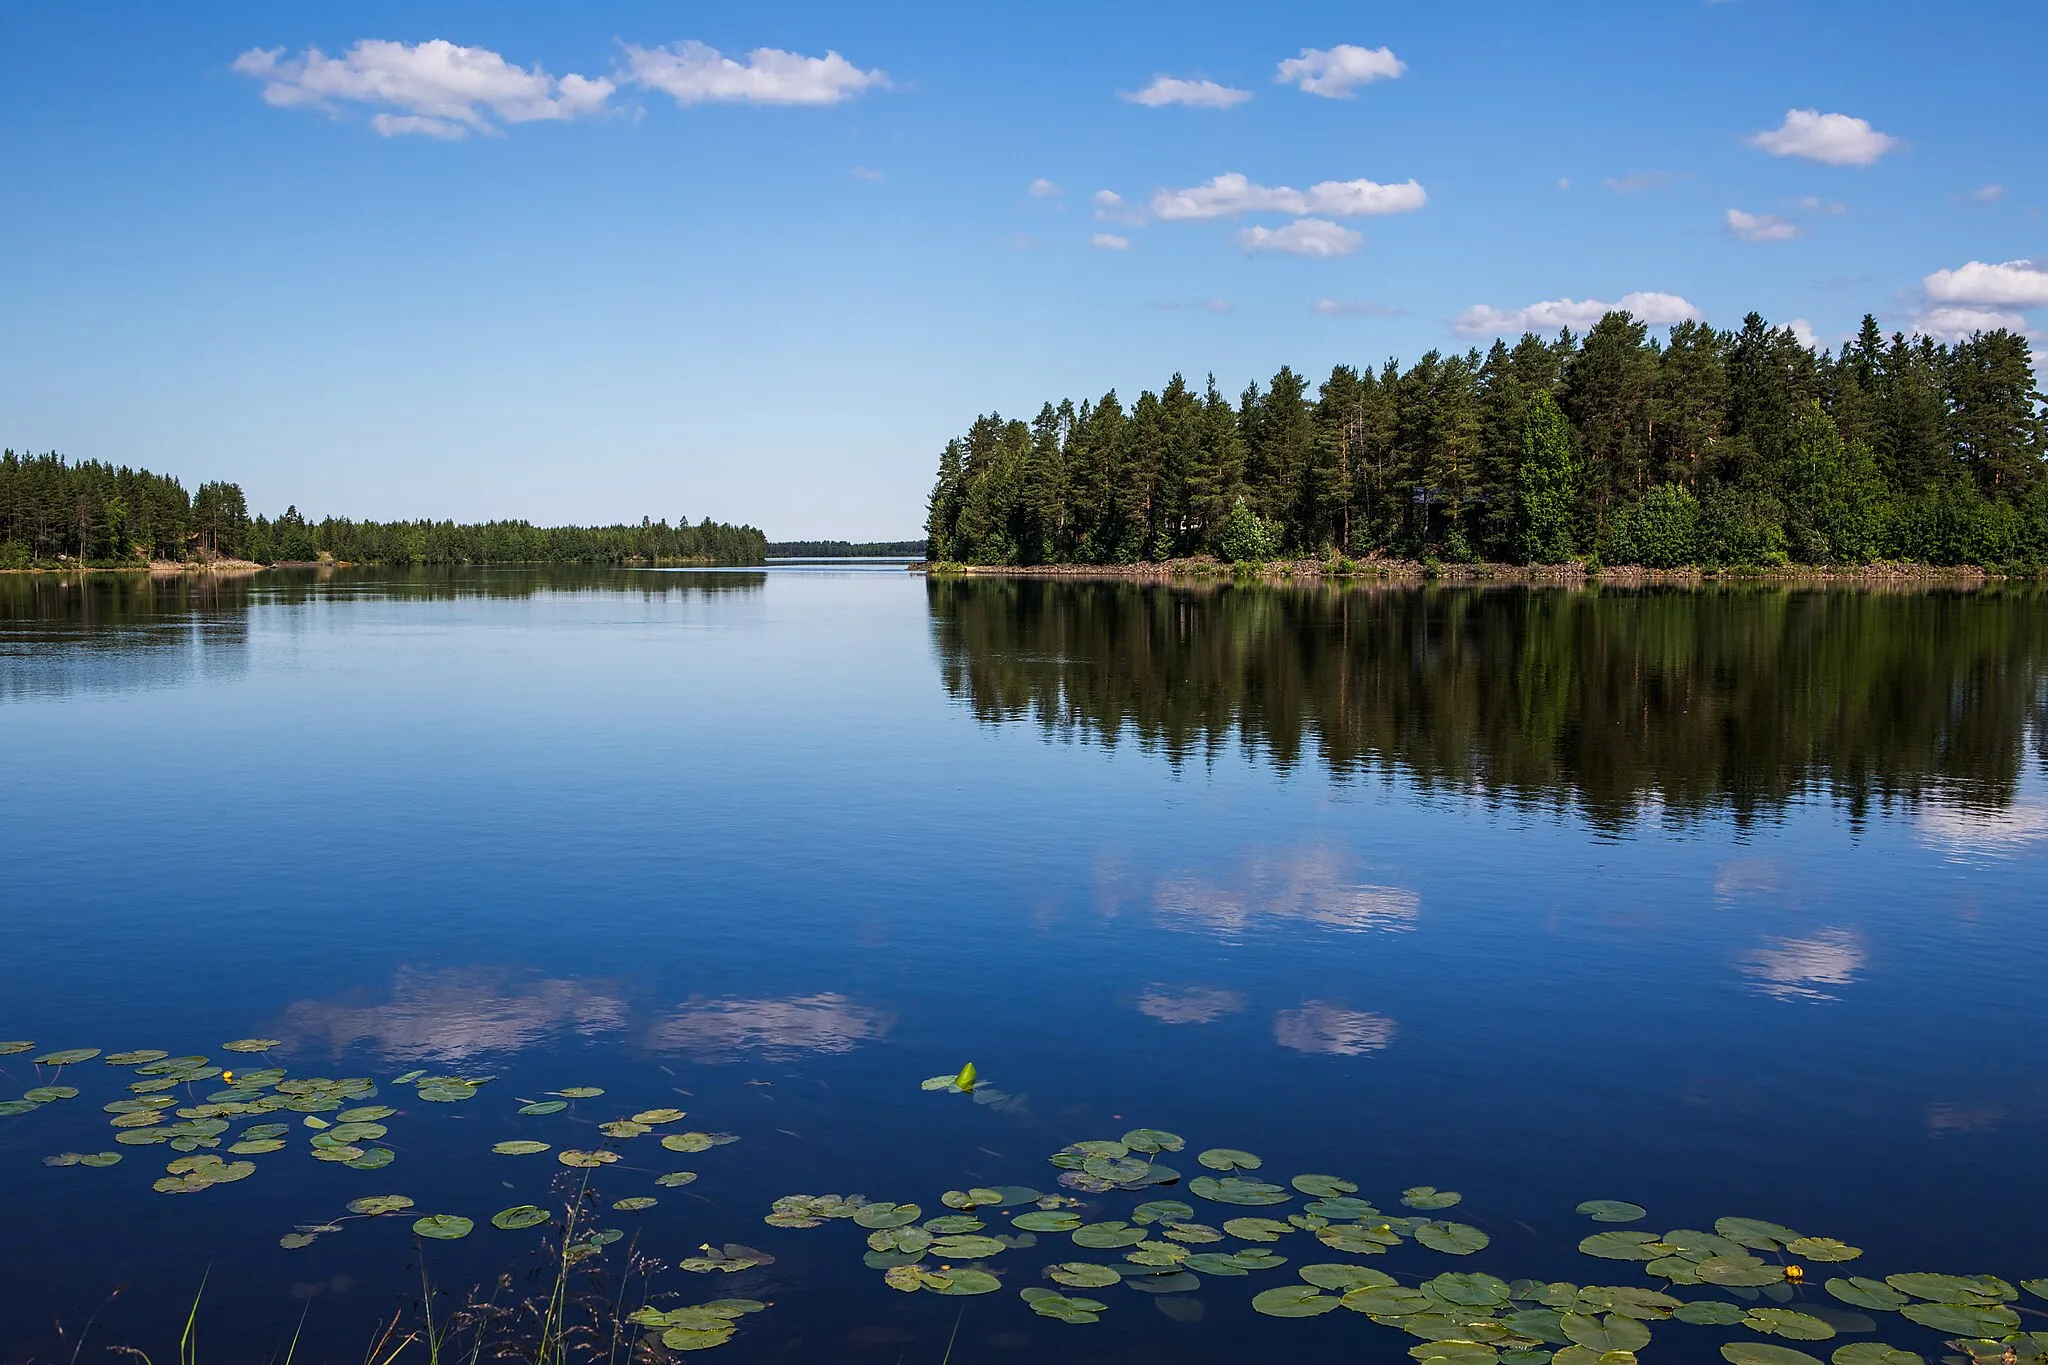 Photo showing: River Iijoki photographed in Rajala, Jakkukylä, Ii, Finland